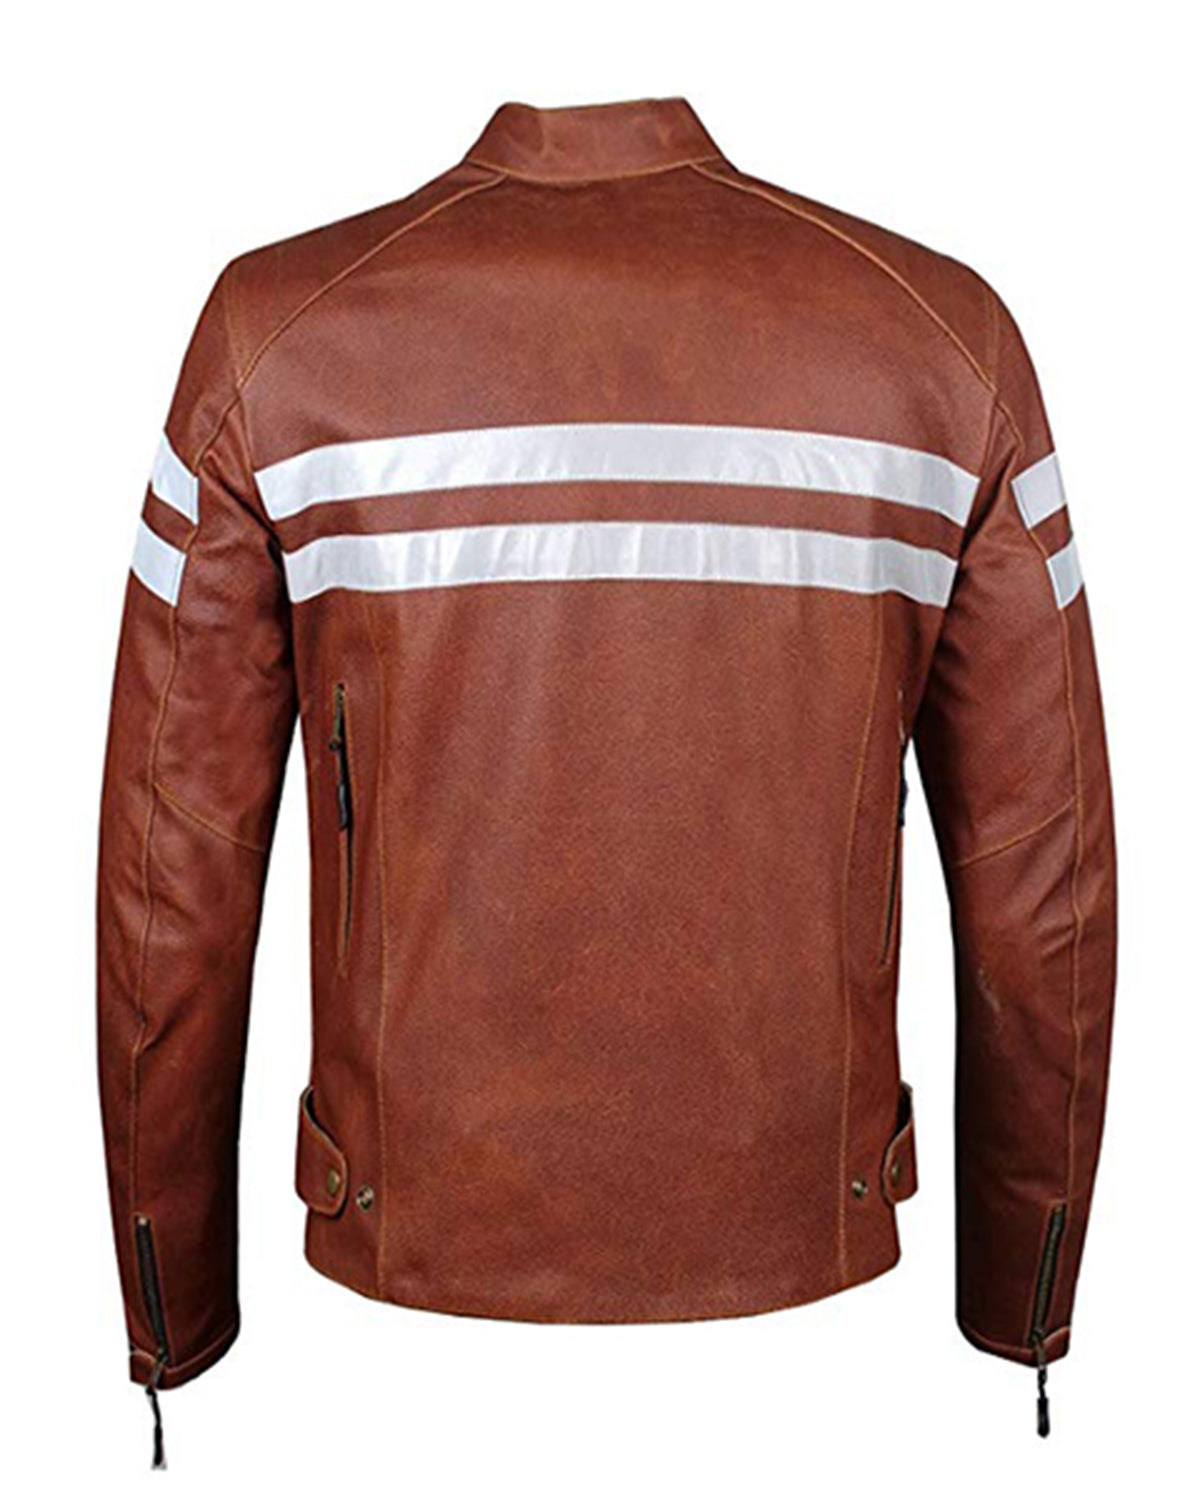 Brown Motorcycle Biker Vintage Leather Jacket For Mens